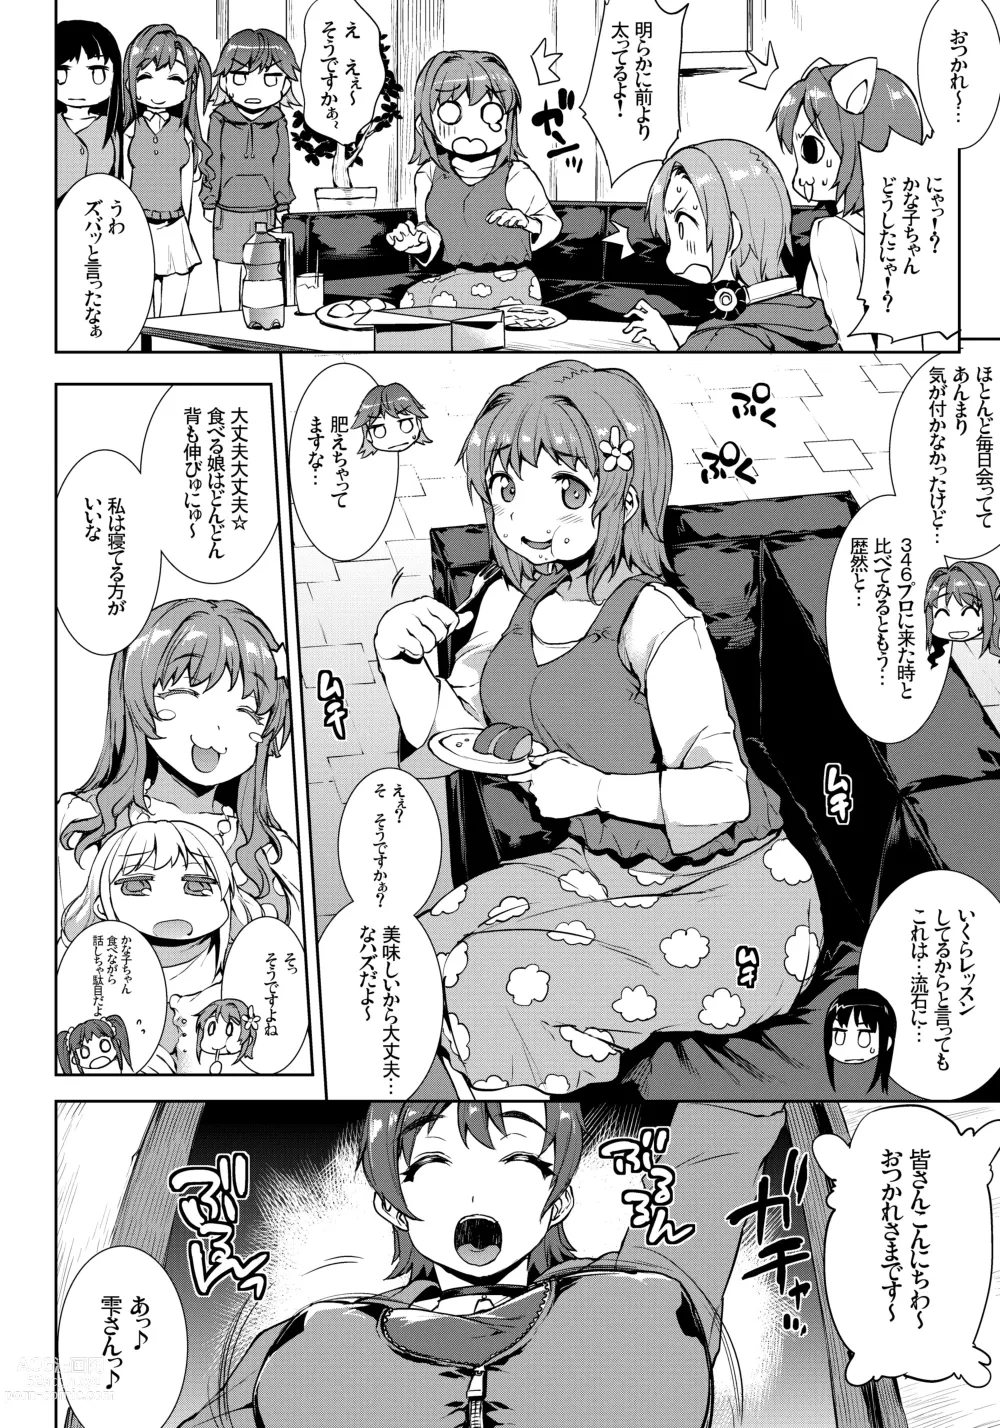 Page 6 of doujinshi Muffin☆Top!